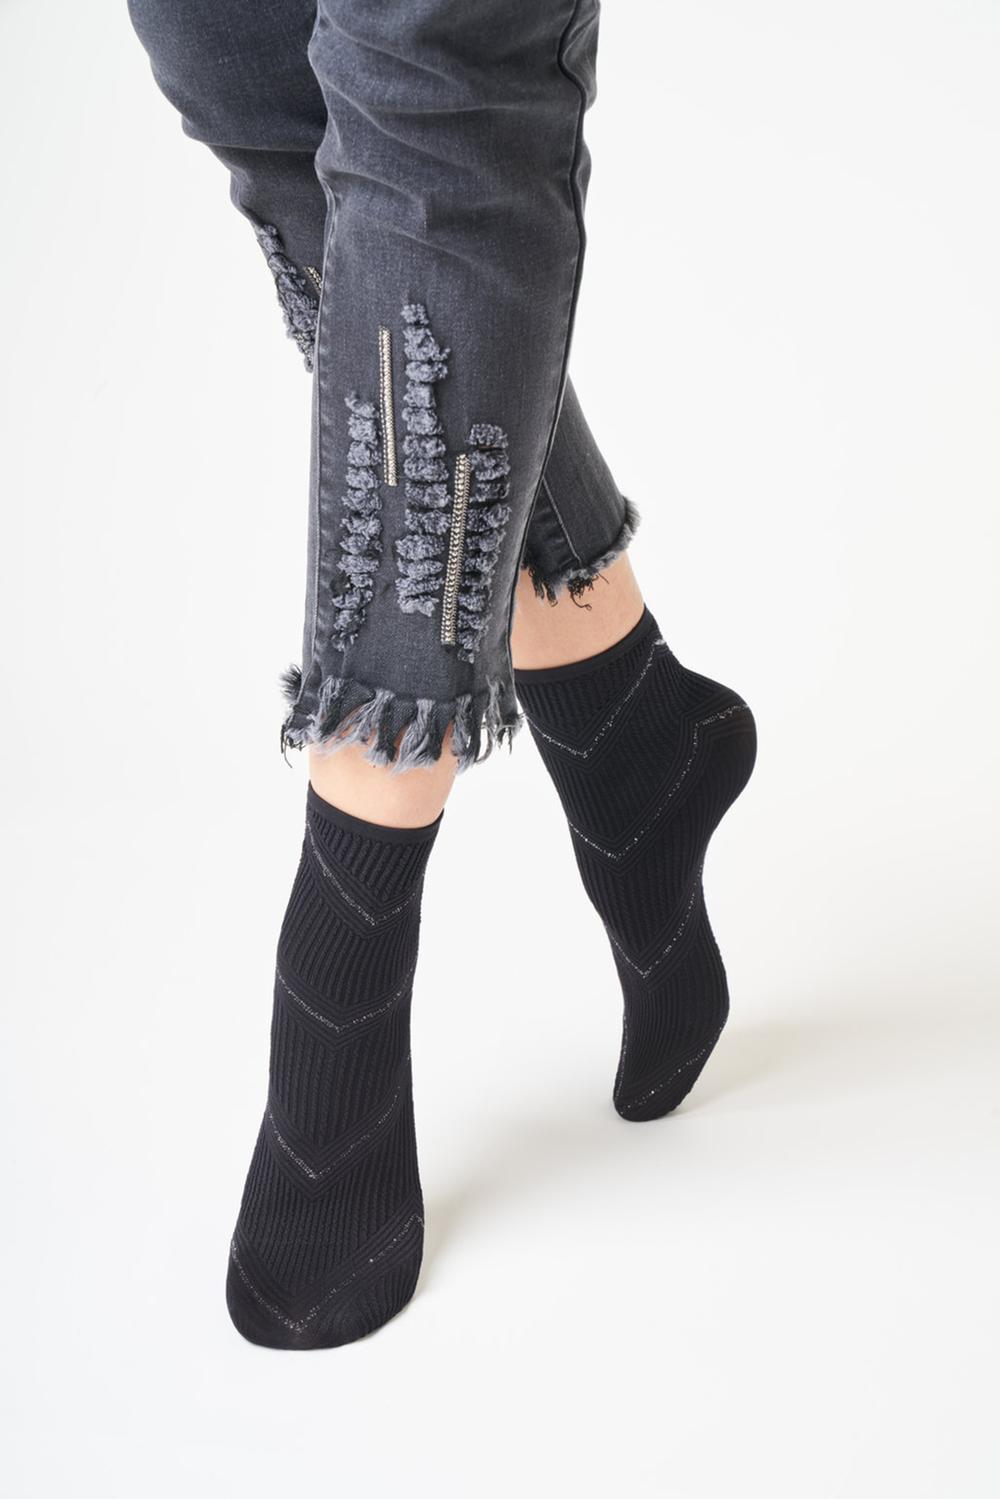 SiSi Rilievo Calzino - Black soft opaque ribbed fashion ankle sock with a zig-zag rib pattern with a stripe of sparkly silver metallized yarn.